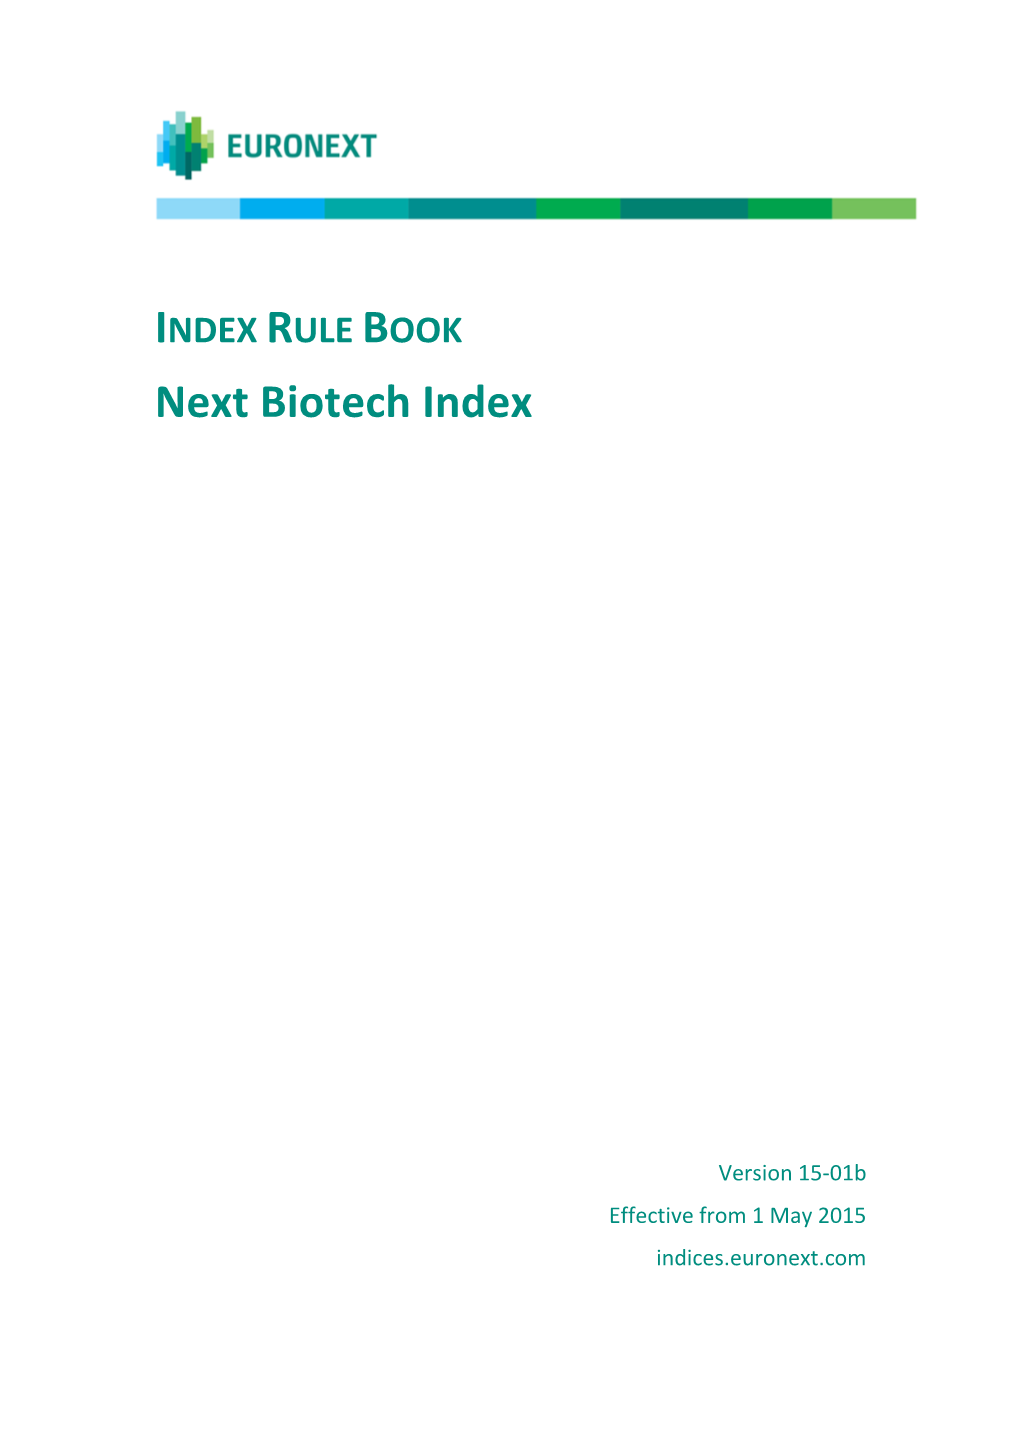 Next Biotech Index